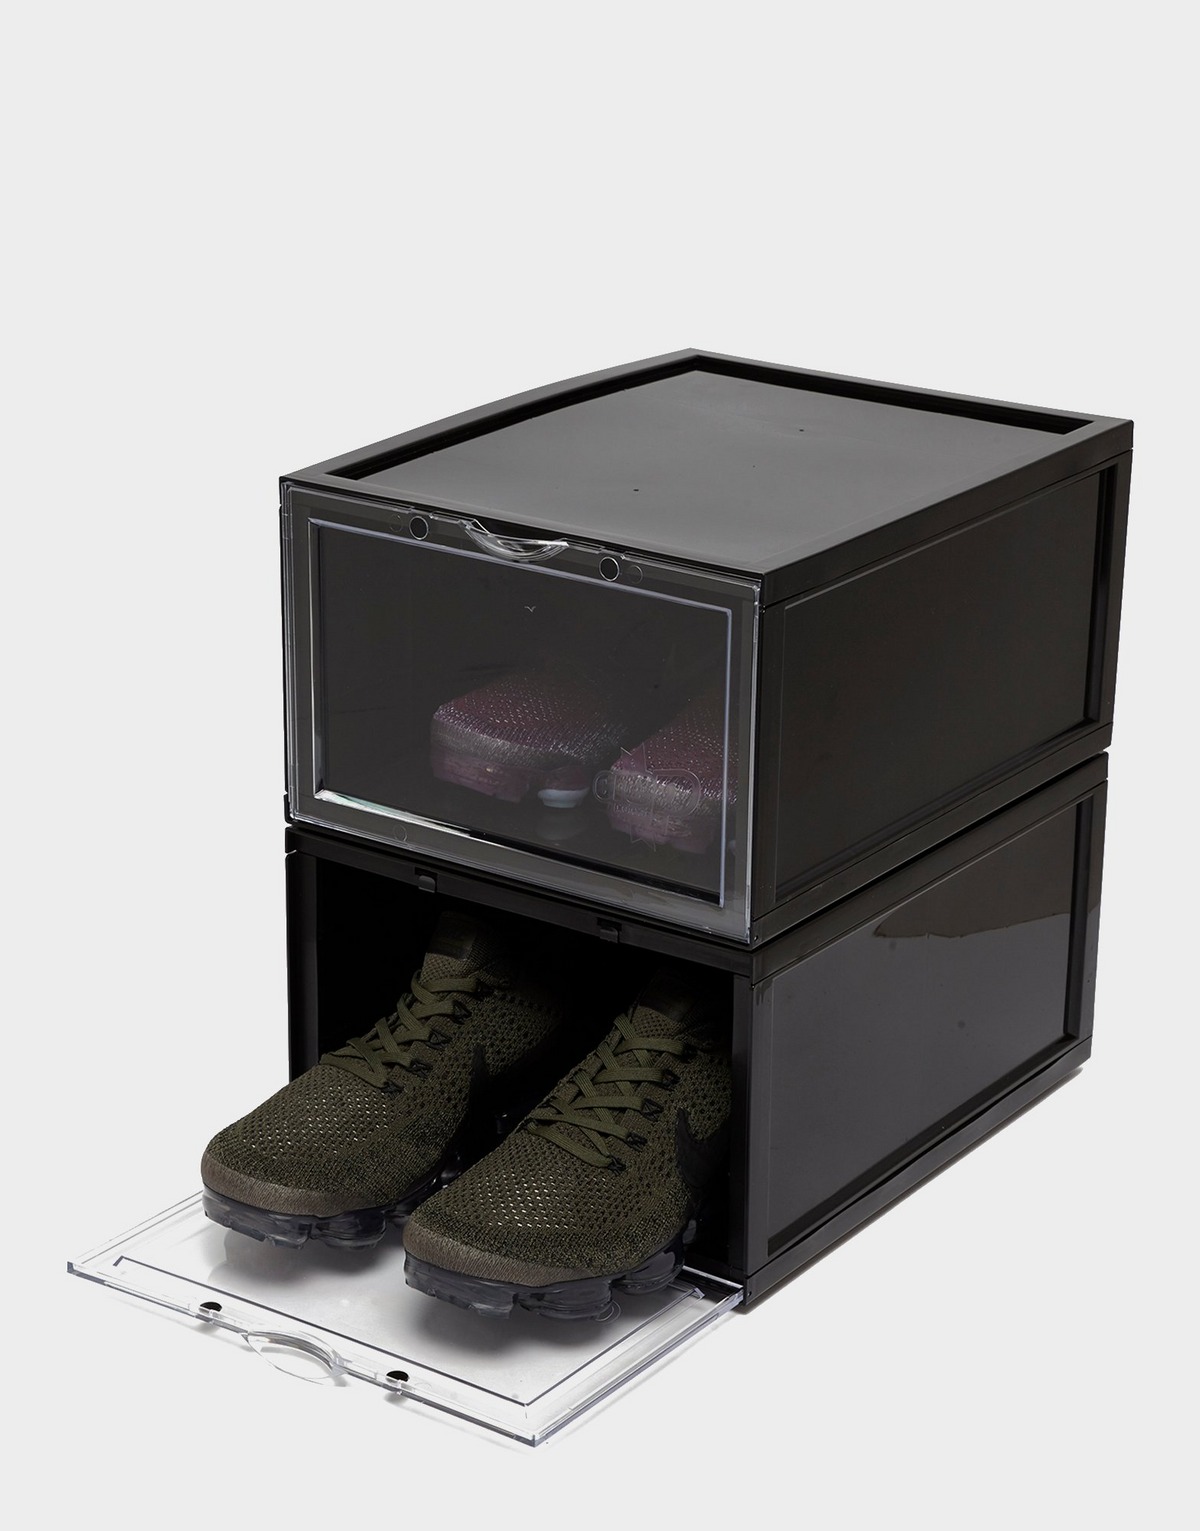 Crep Protect
Crep Crates
Shoe storage box